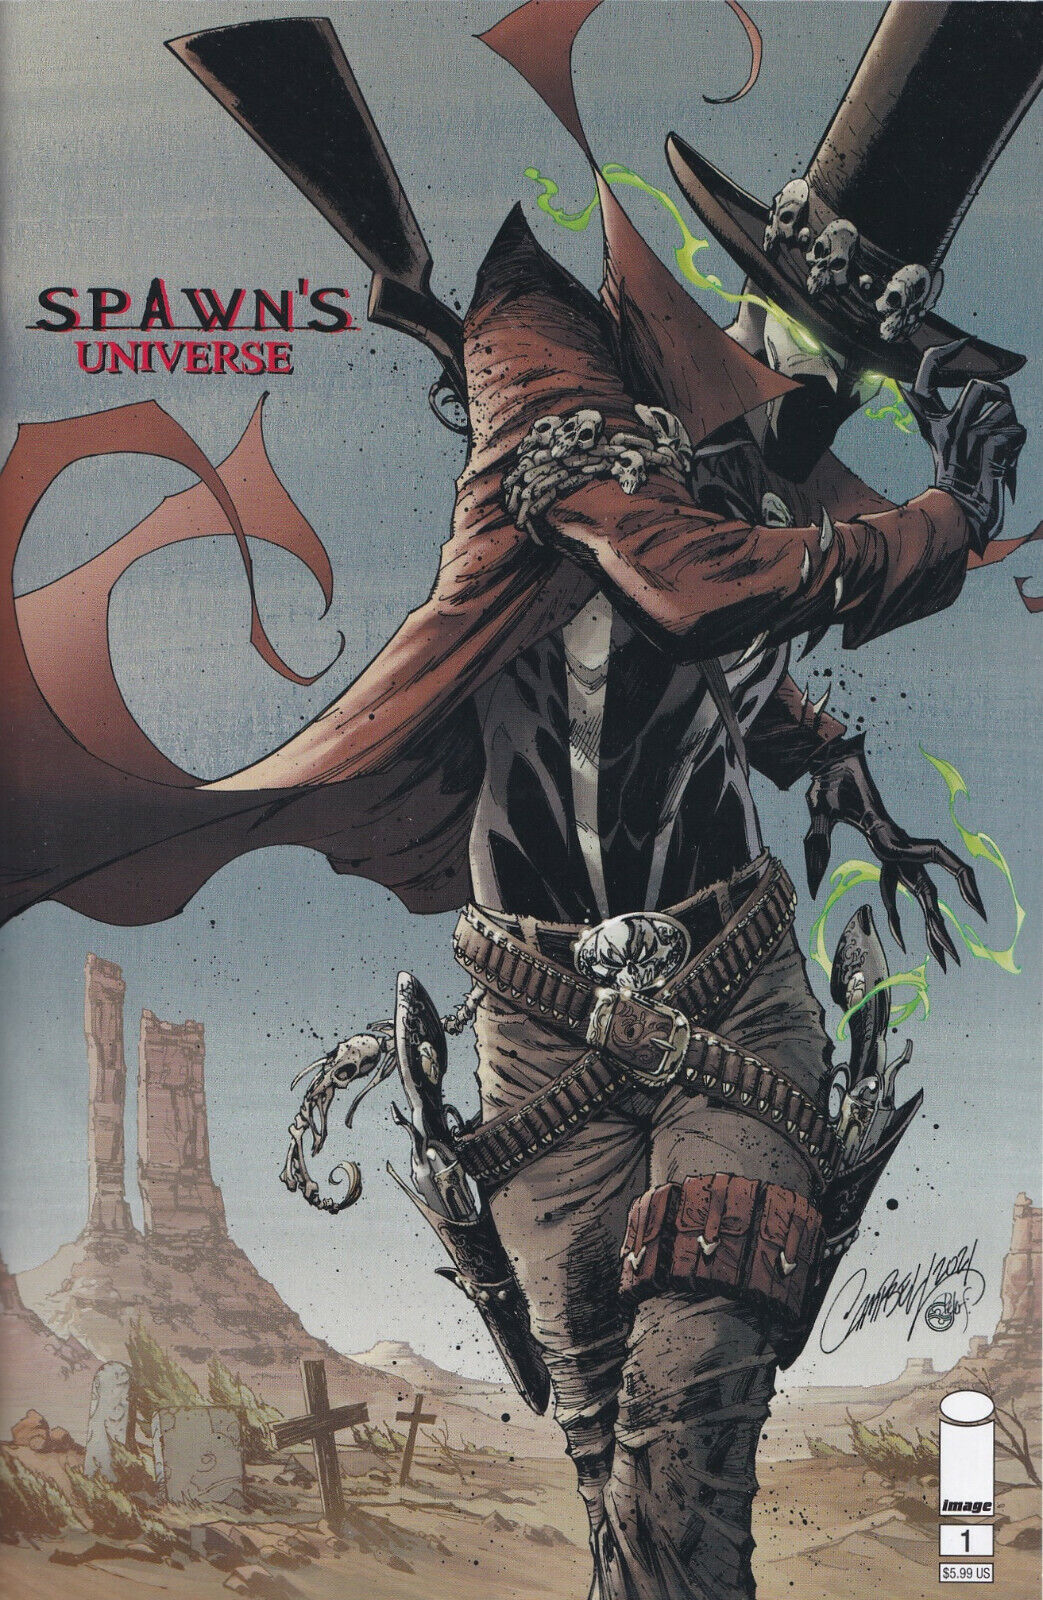 SPAWN'S UNIVERSE #1 (J. SCOTT CAMPBELL GUNSLINGER SPAWN VARIANT) ~ Image Comics